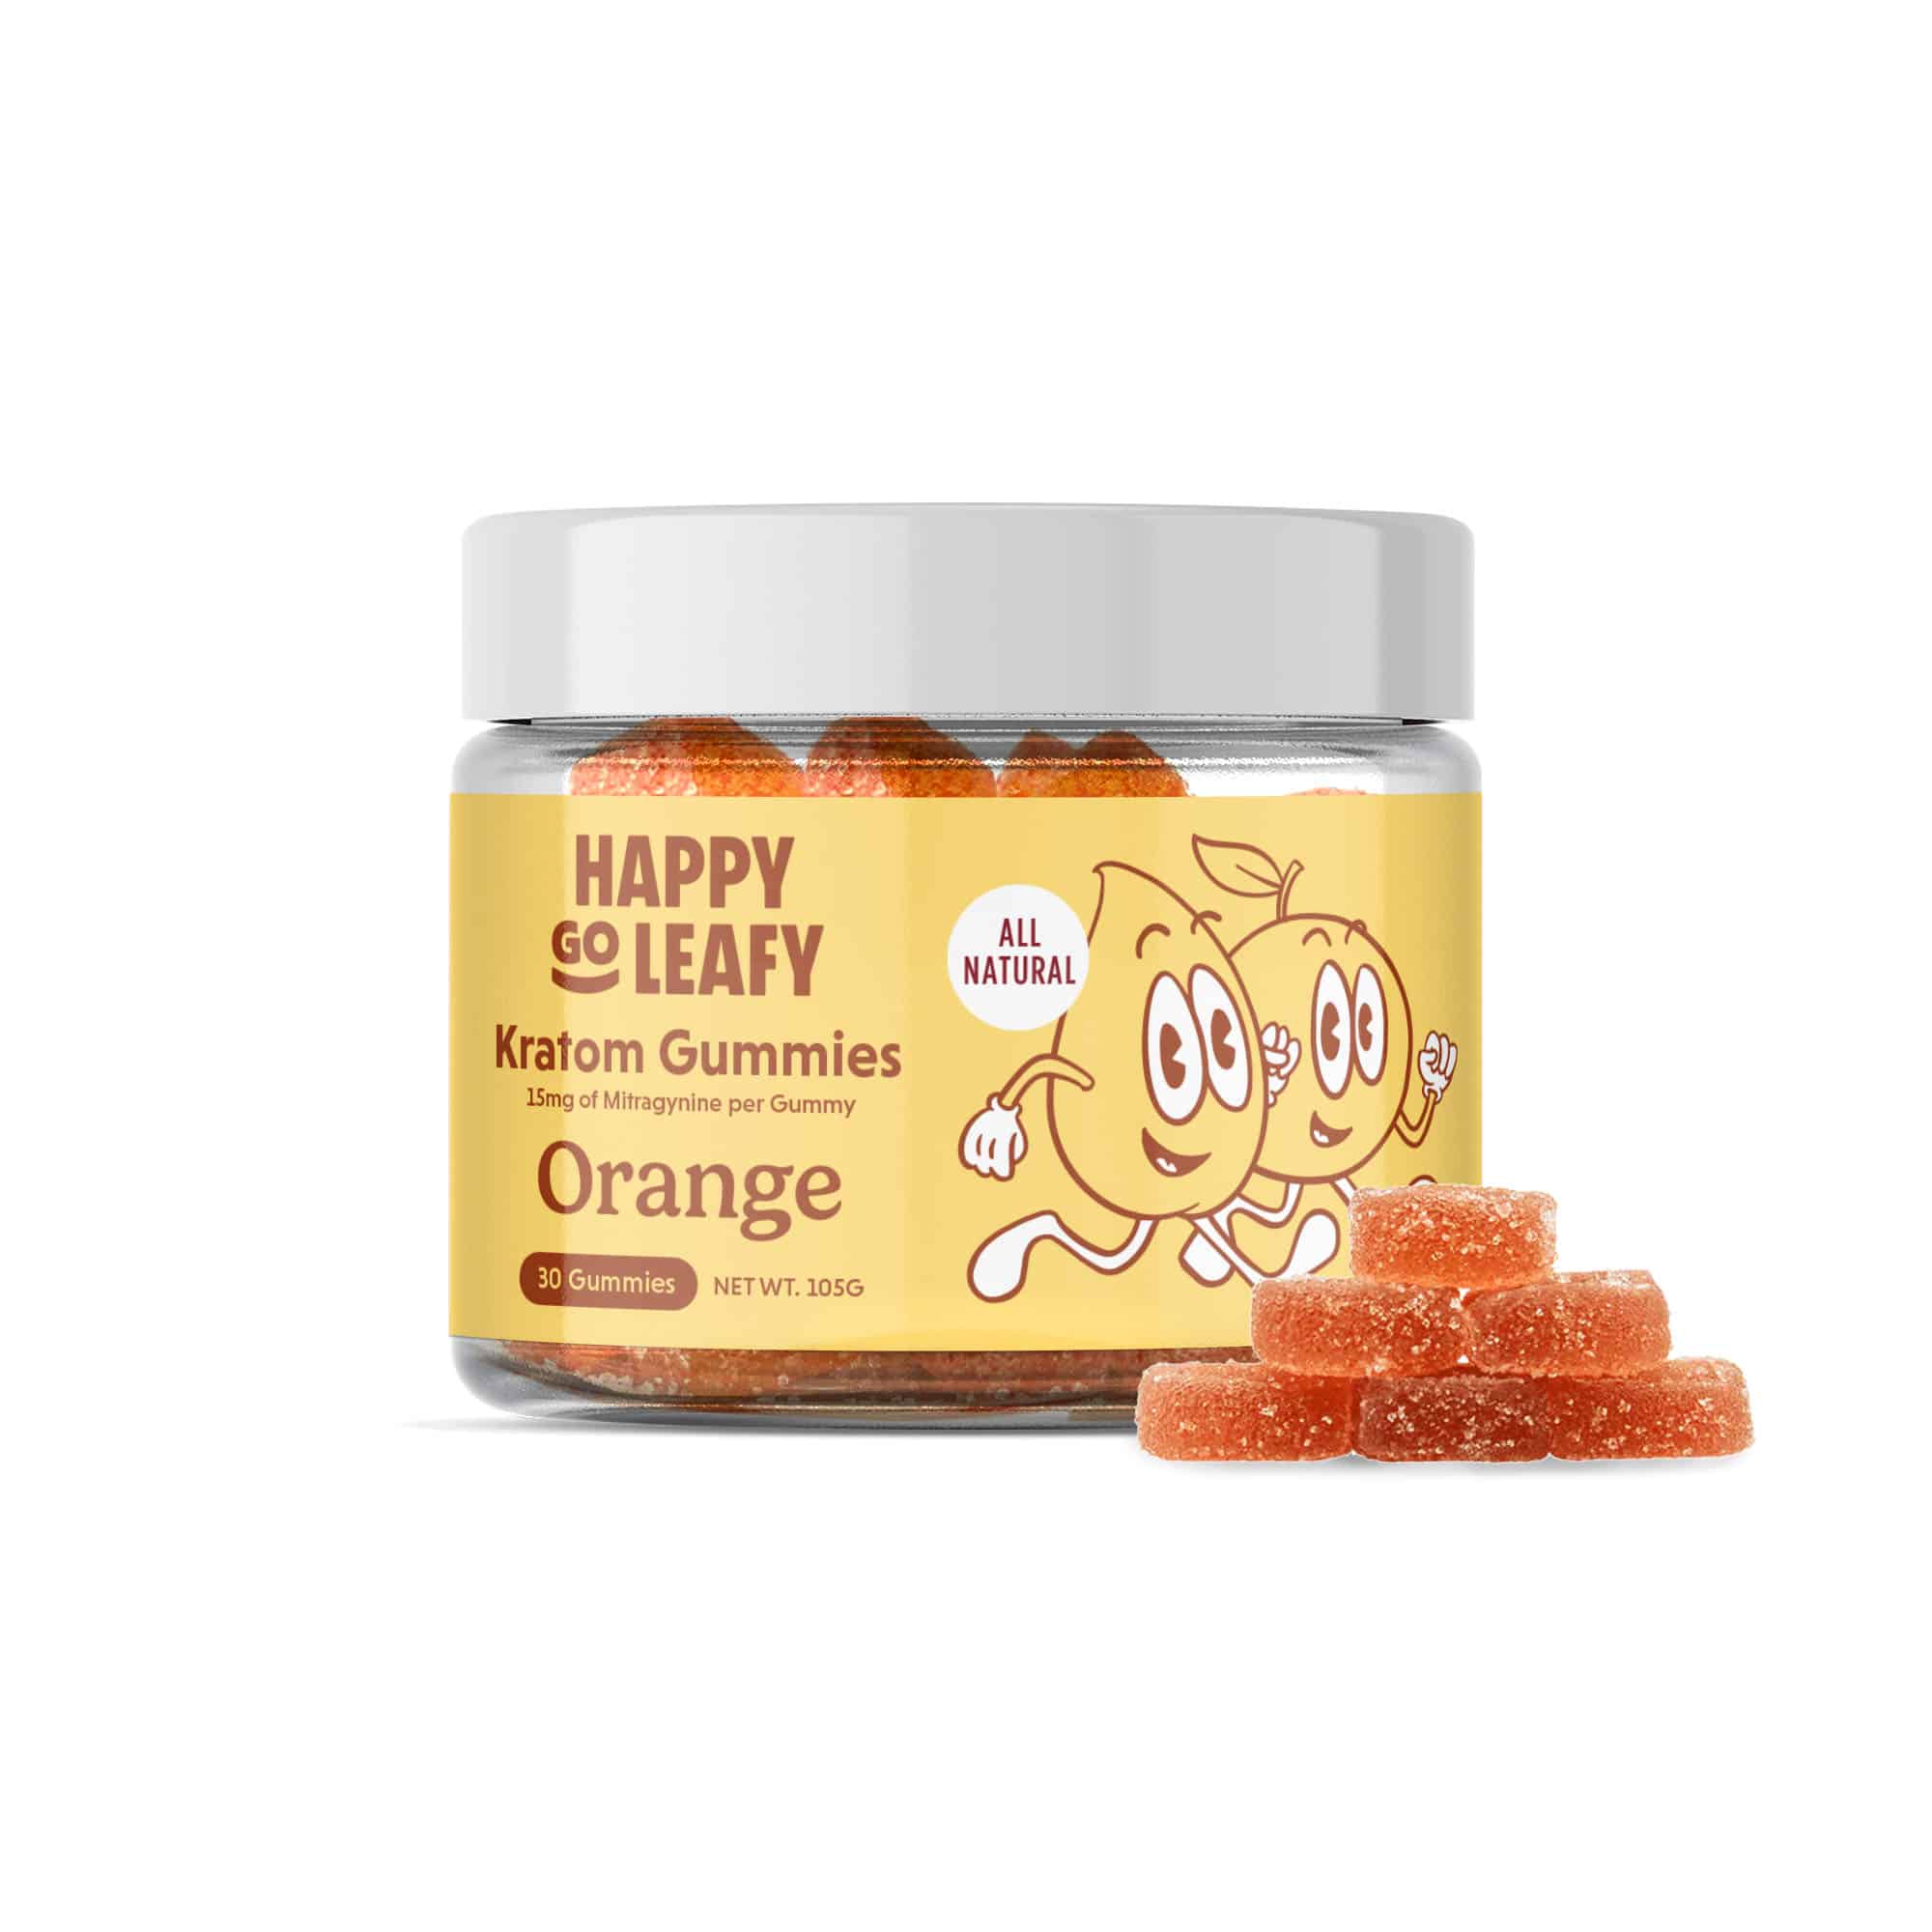 Orange Kratom Gummies